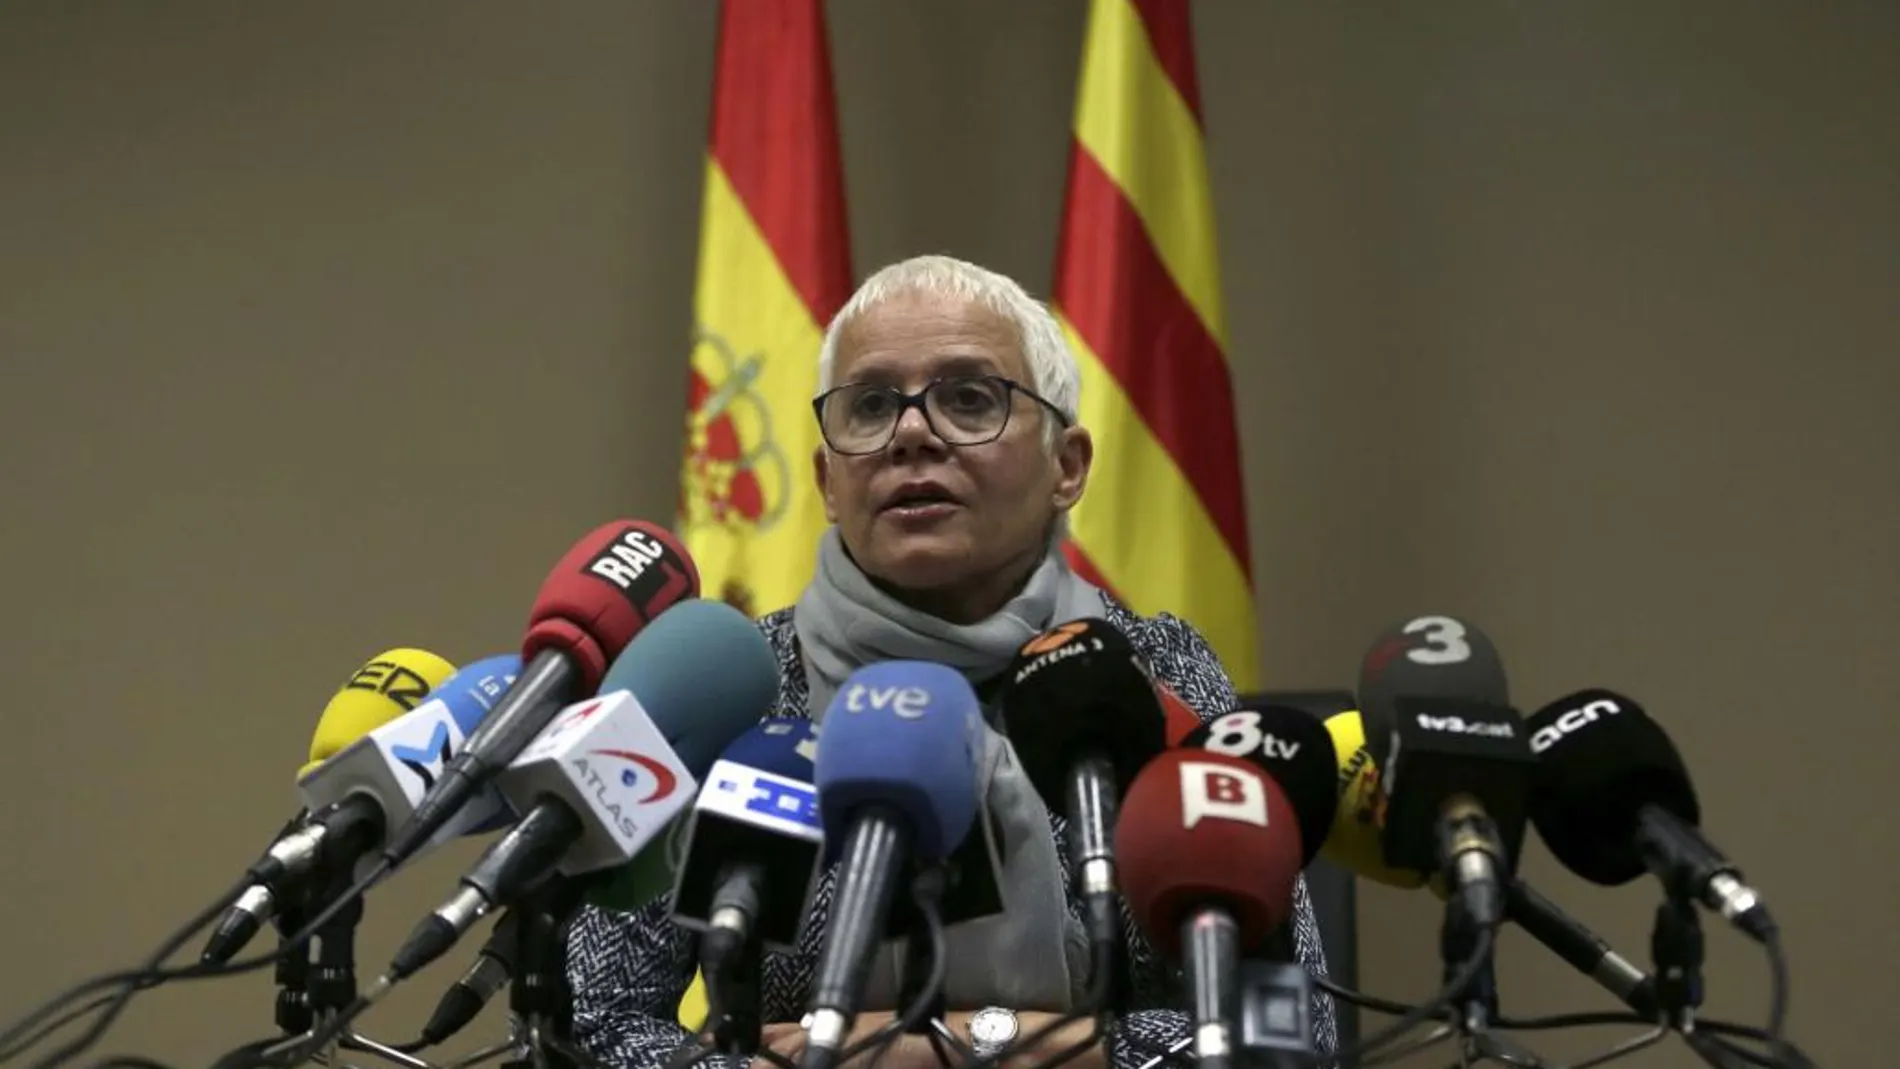 La Fiscal Jefe de Barcelona, Ana Magaldi